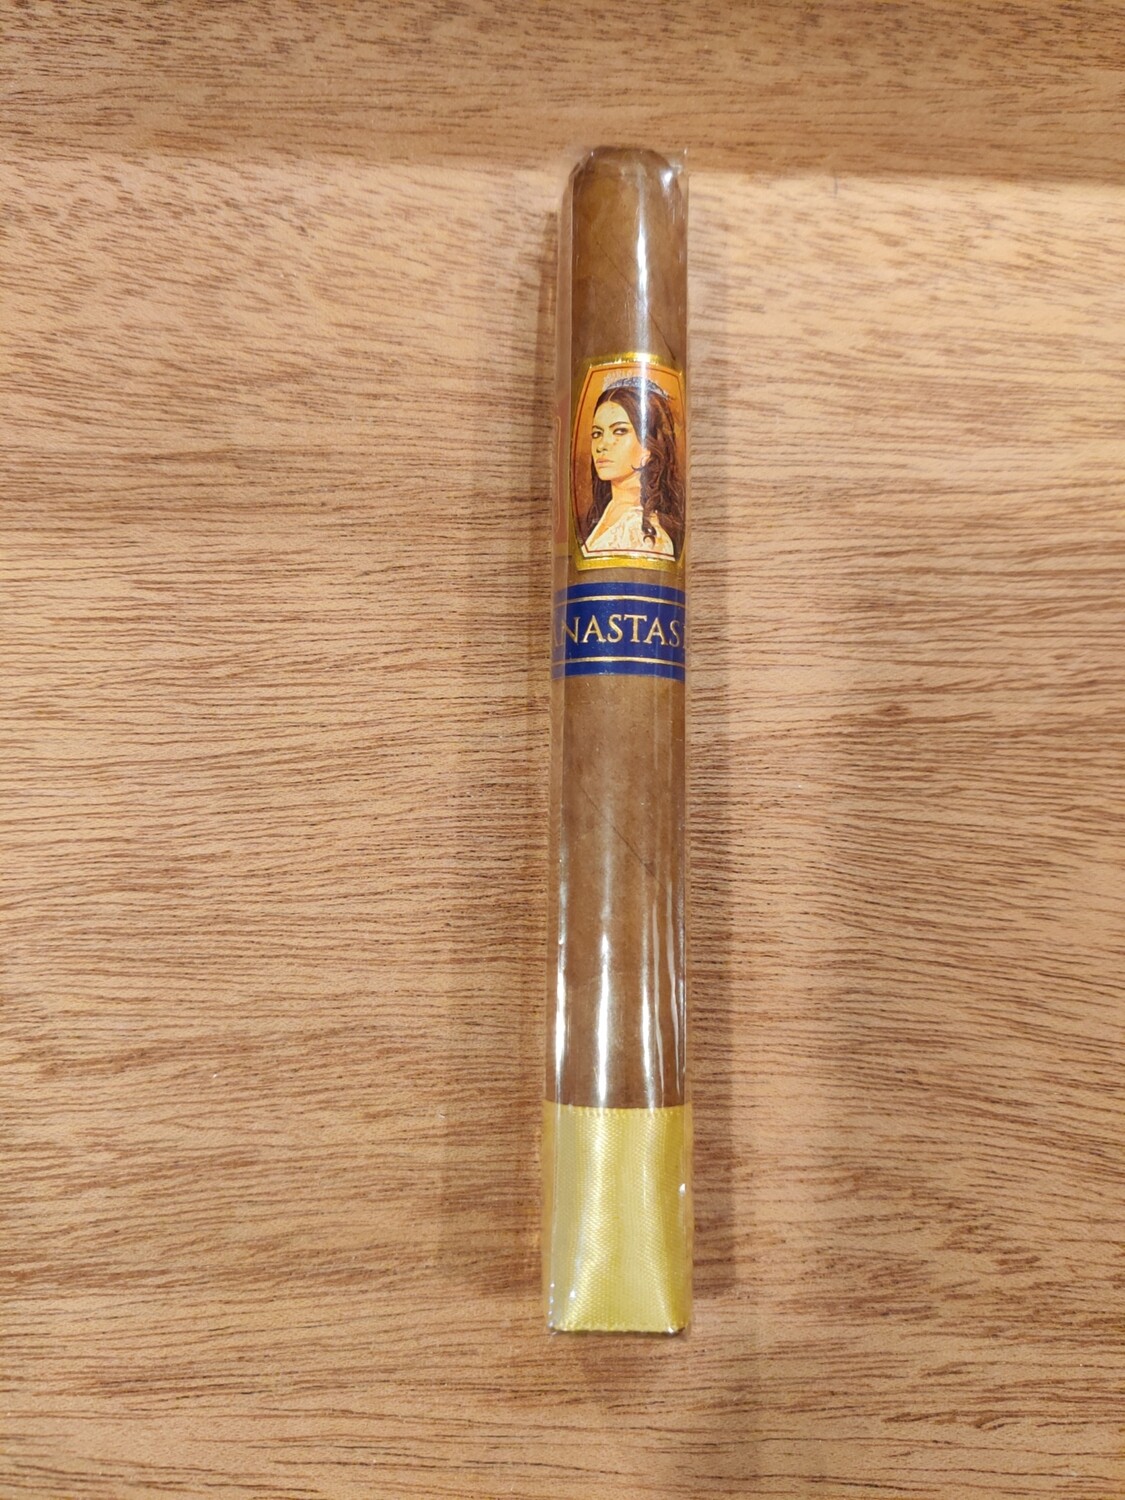 Caldwell Anastasia Caspia 43x5.75 Cigar